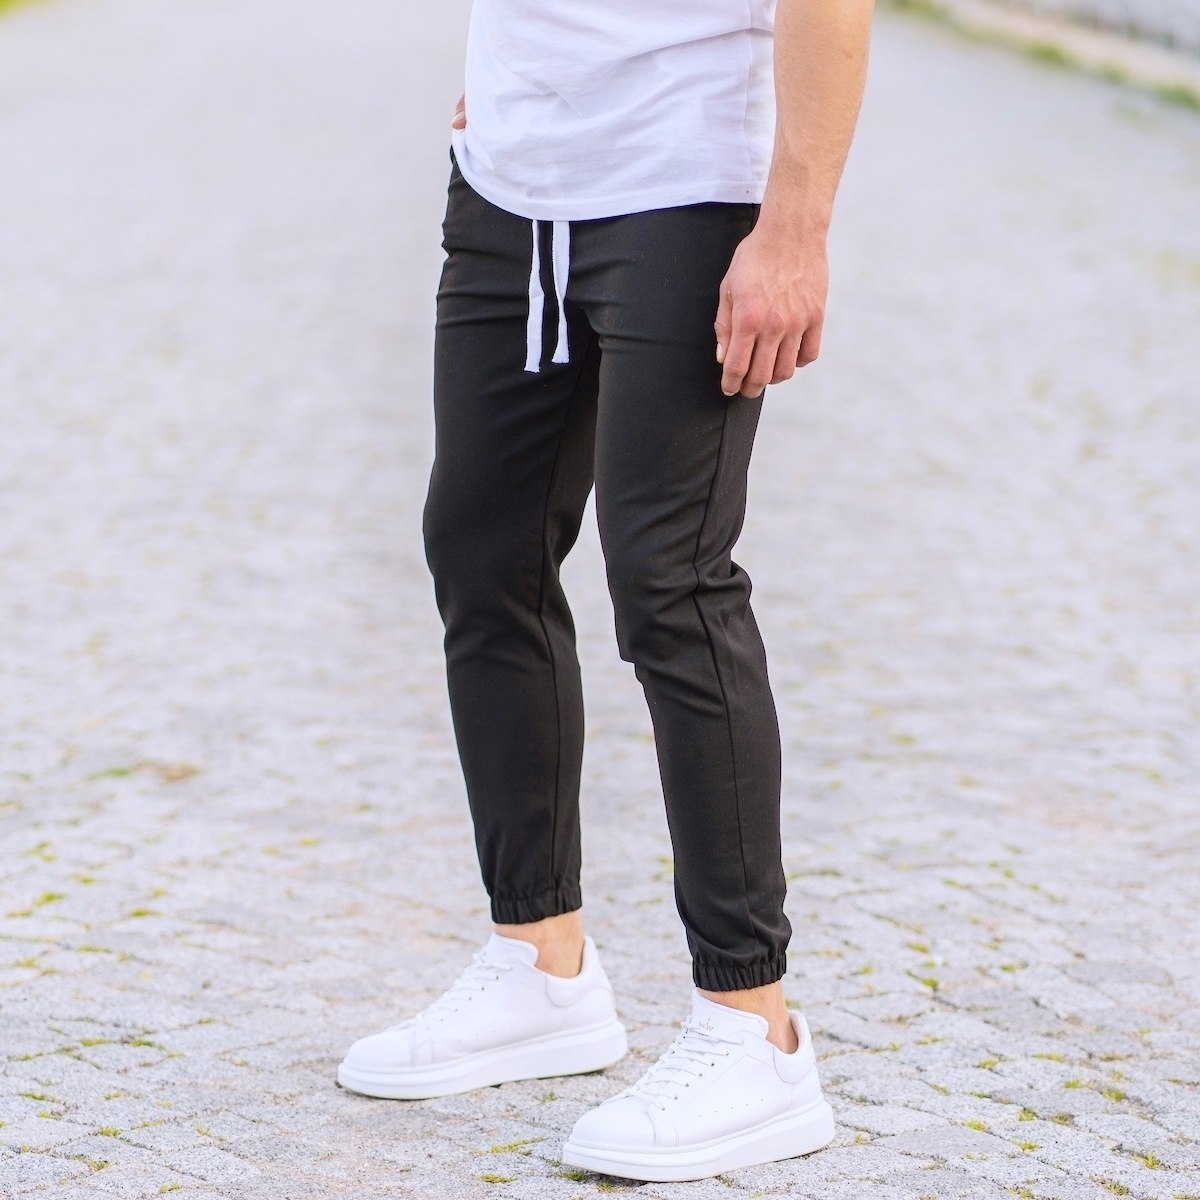 Men's Basic Elasticated Sport Pants Solid Black